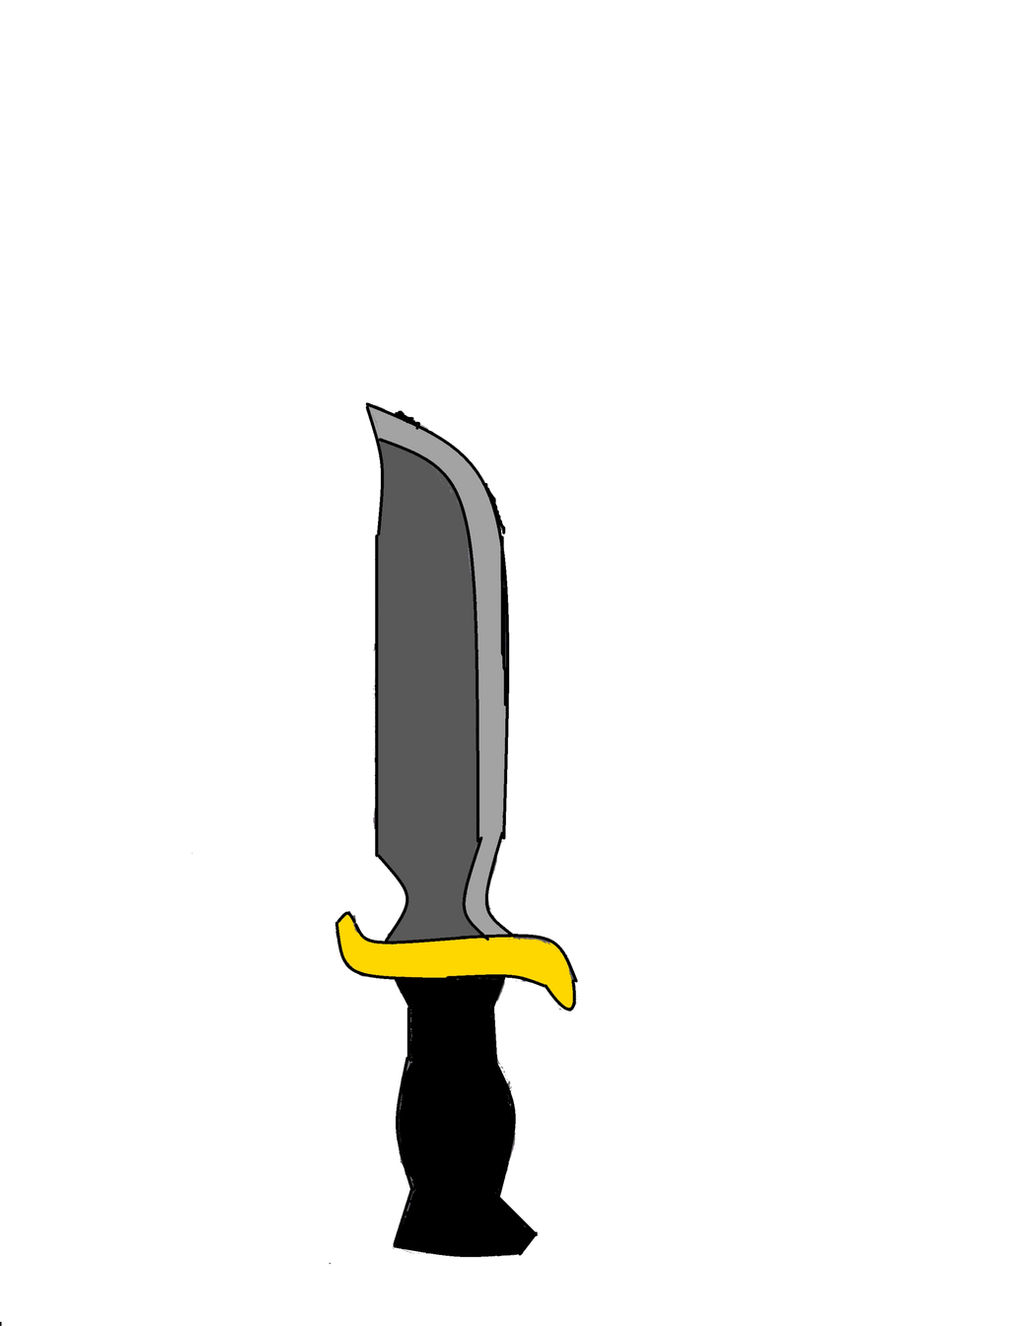 Roblox Murder Mystery 2 Knife